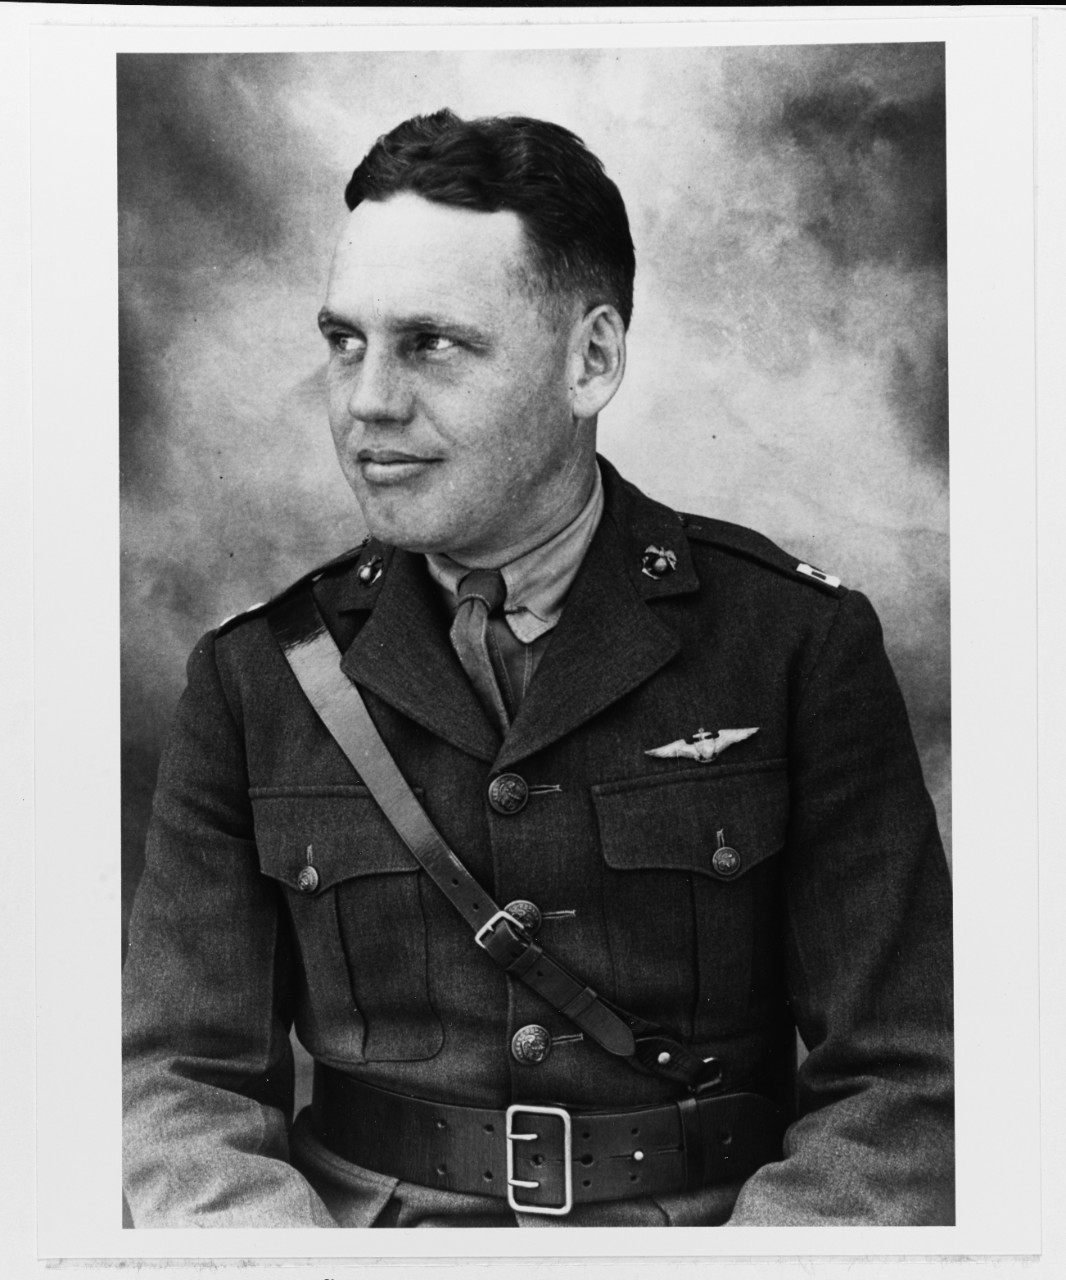 Captain Arthur H. Page, Jr., USMC, aviator, circa 1929.